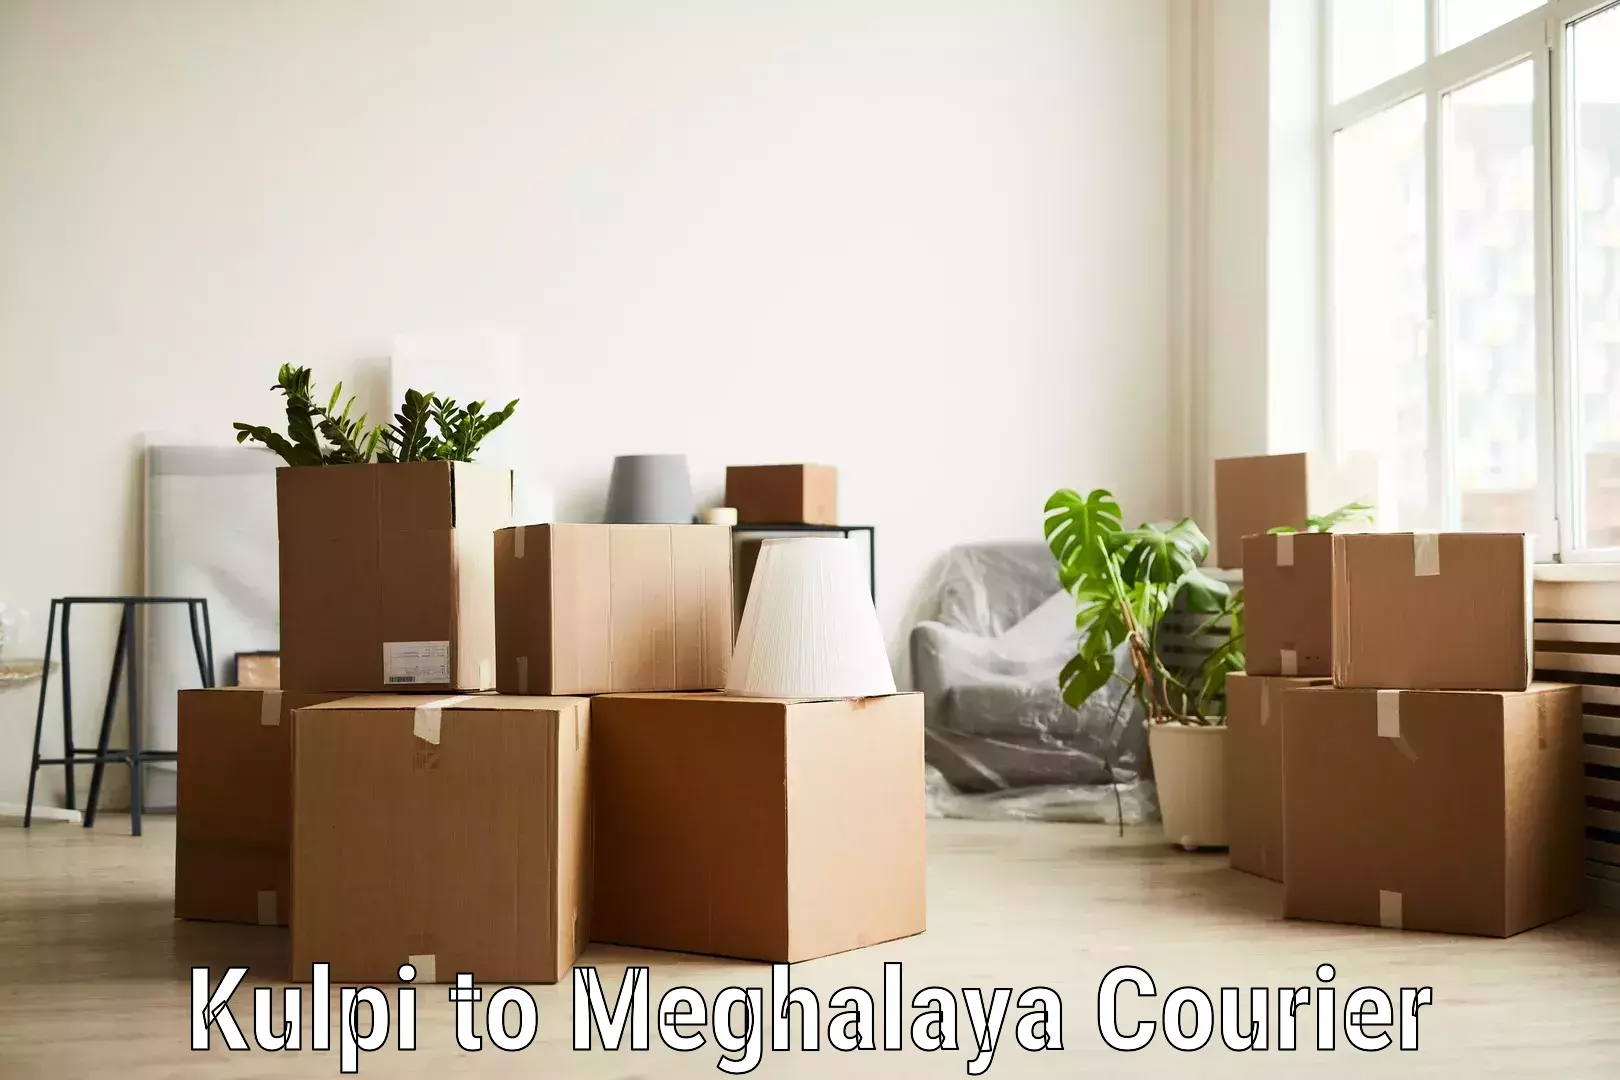 Courier service partnerships Kulpi to Meghalaya